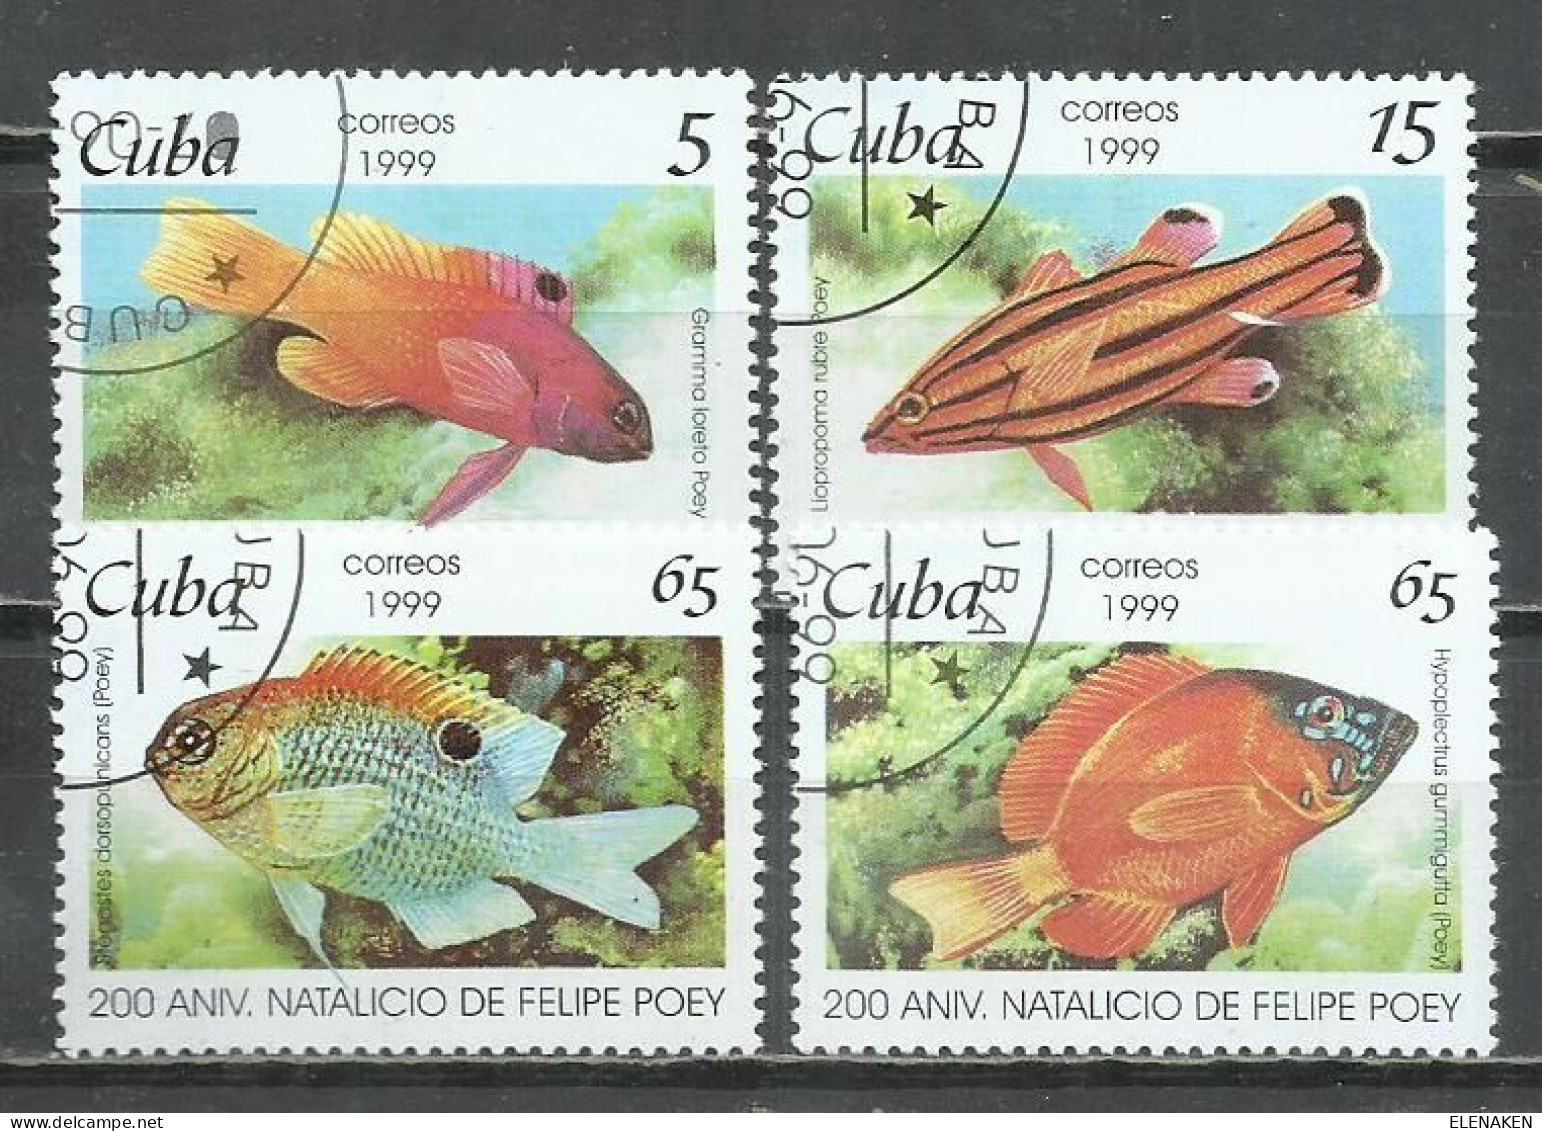 6200E-SERIE COMPLETA PECES FAUNA MARINA CUBA 1999 Nº 3801/3804 TEMATICOS BONITOS CONMEMORATIVOS - Used Stamps